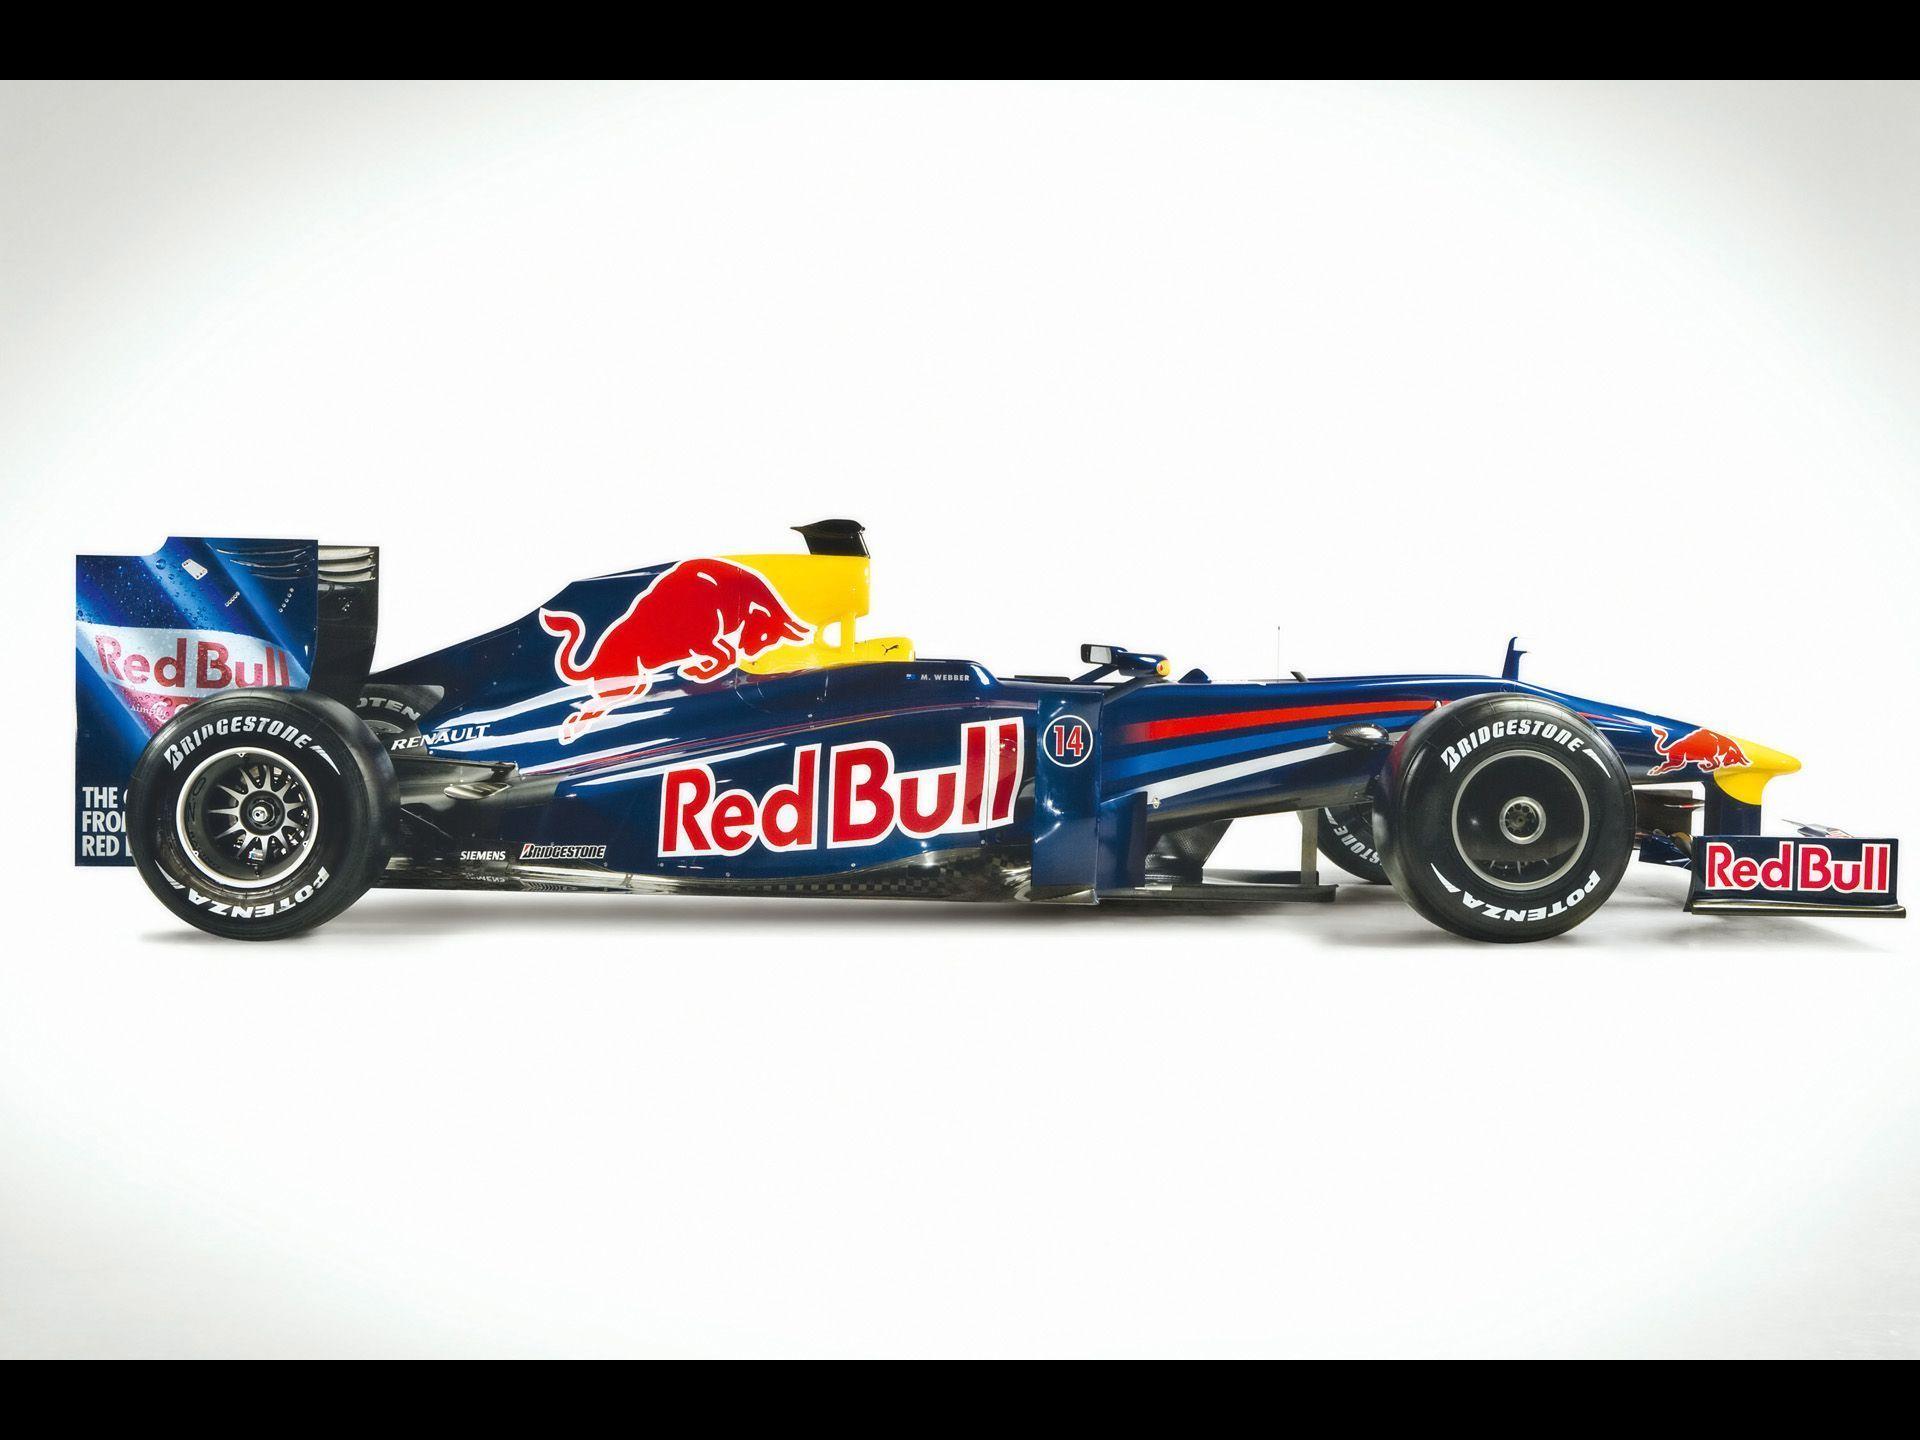 Red Bull F1 side desktop PC and Mac wallpaper